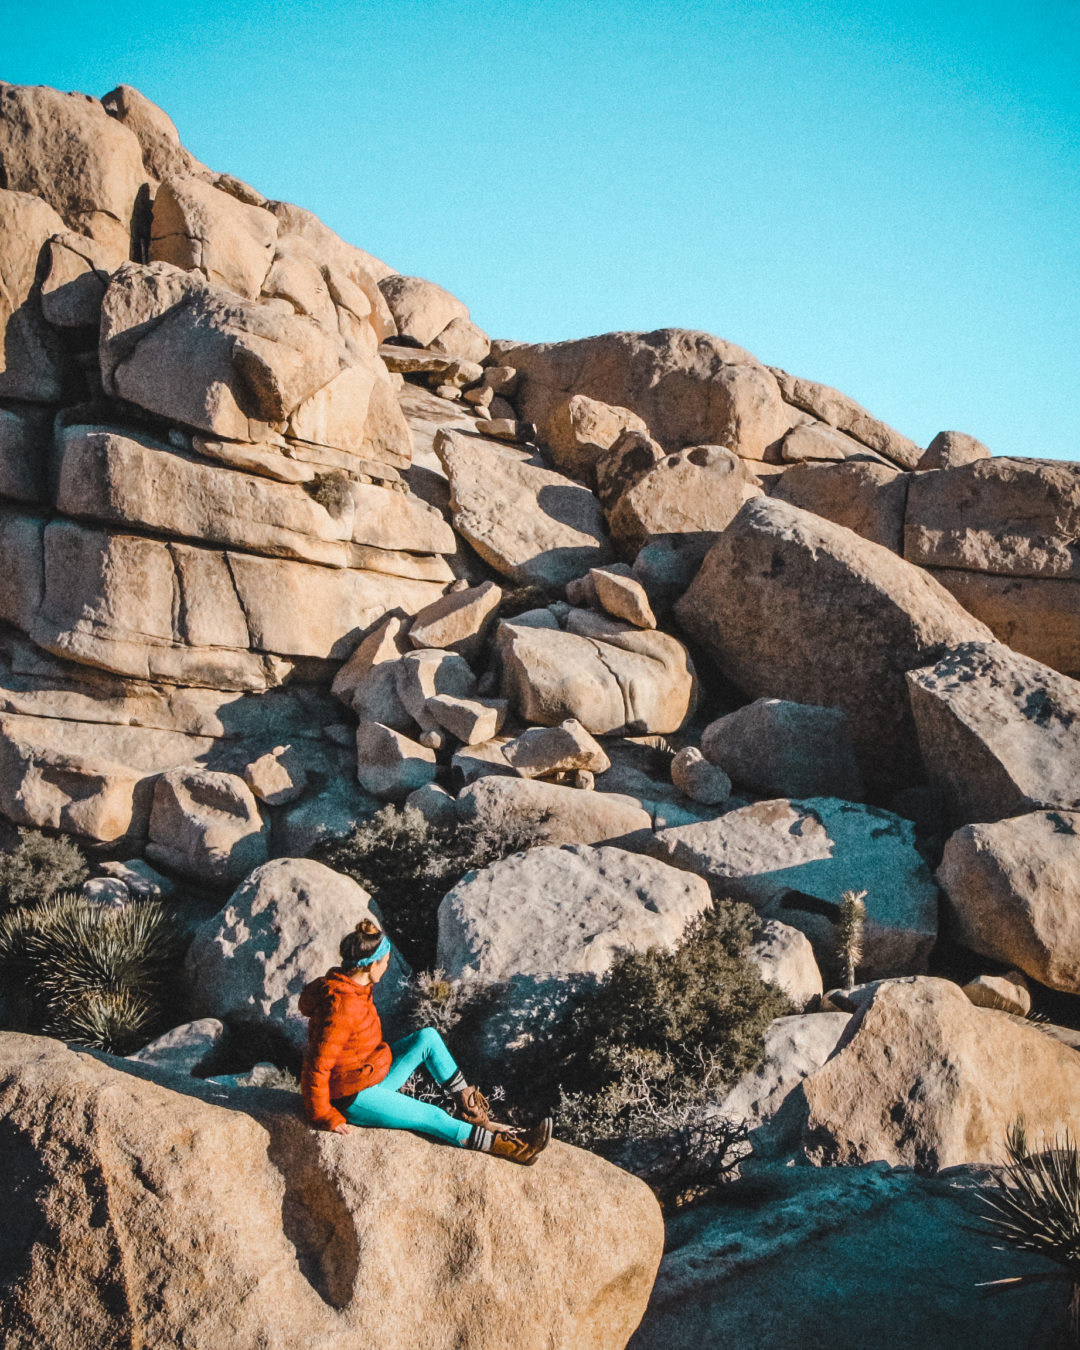 Finding Stillness in the Desert A Yoga Retreat in Joshua Tree National